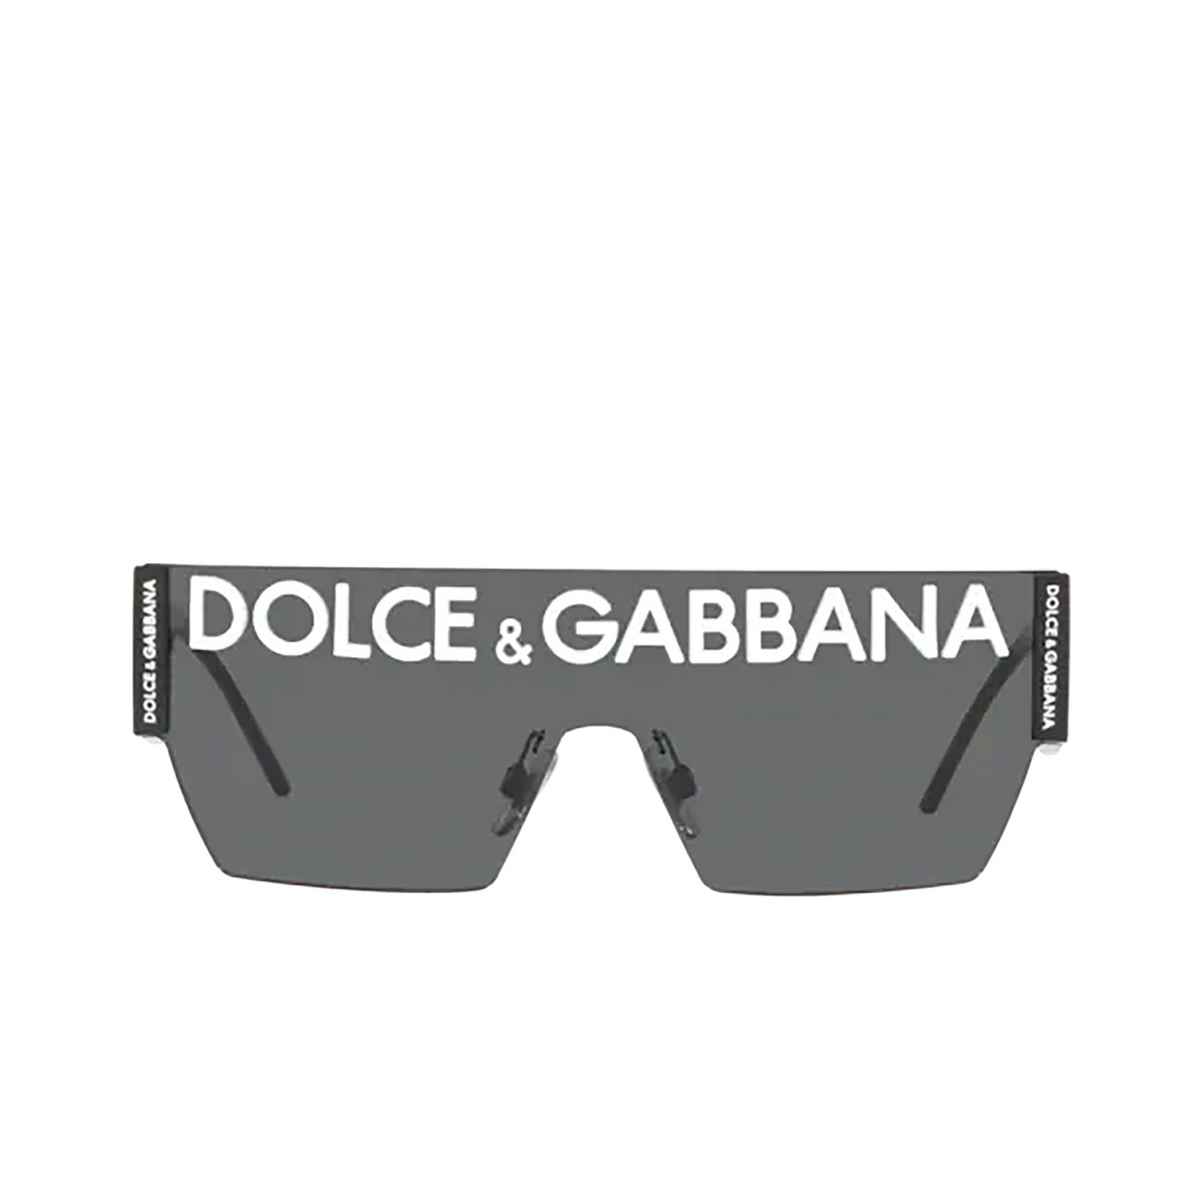 Dolce & Gabbana DG2233 Sunglasses 01/87 Black - front view